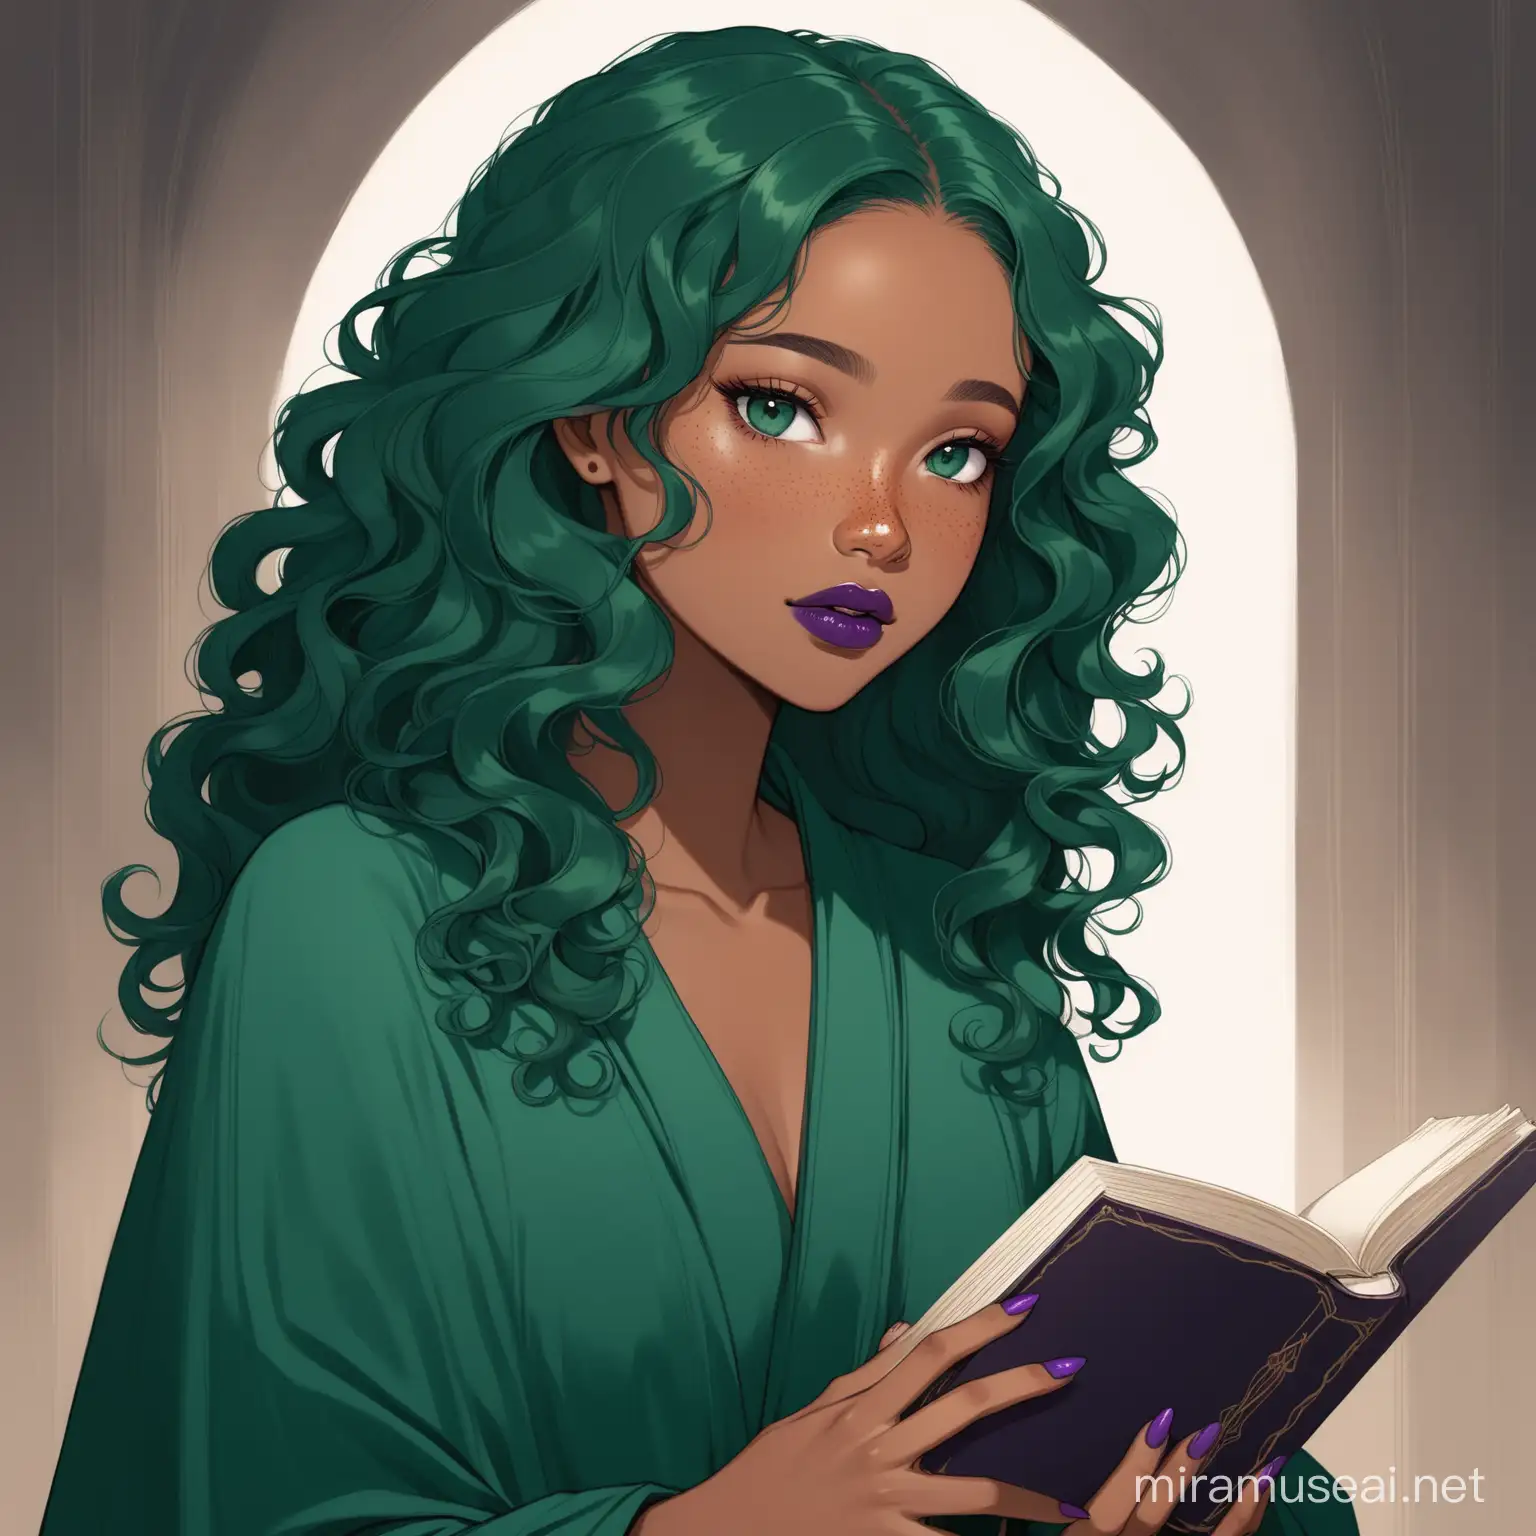 Elegant Black Woman in Green Robe Holding a Book